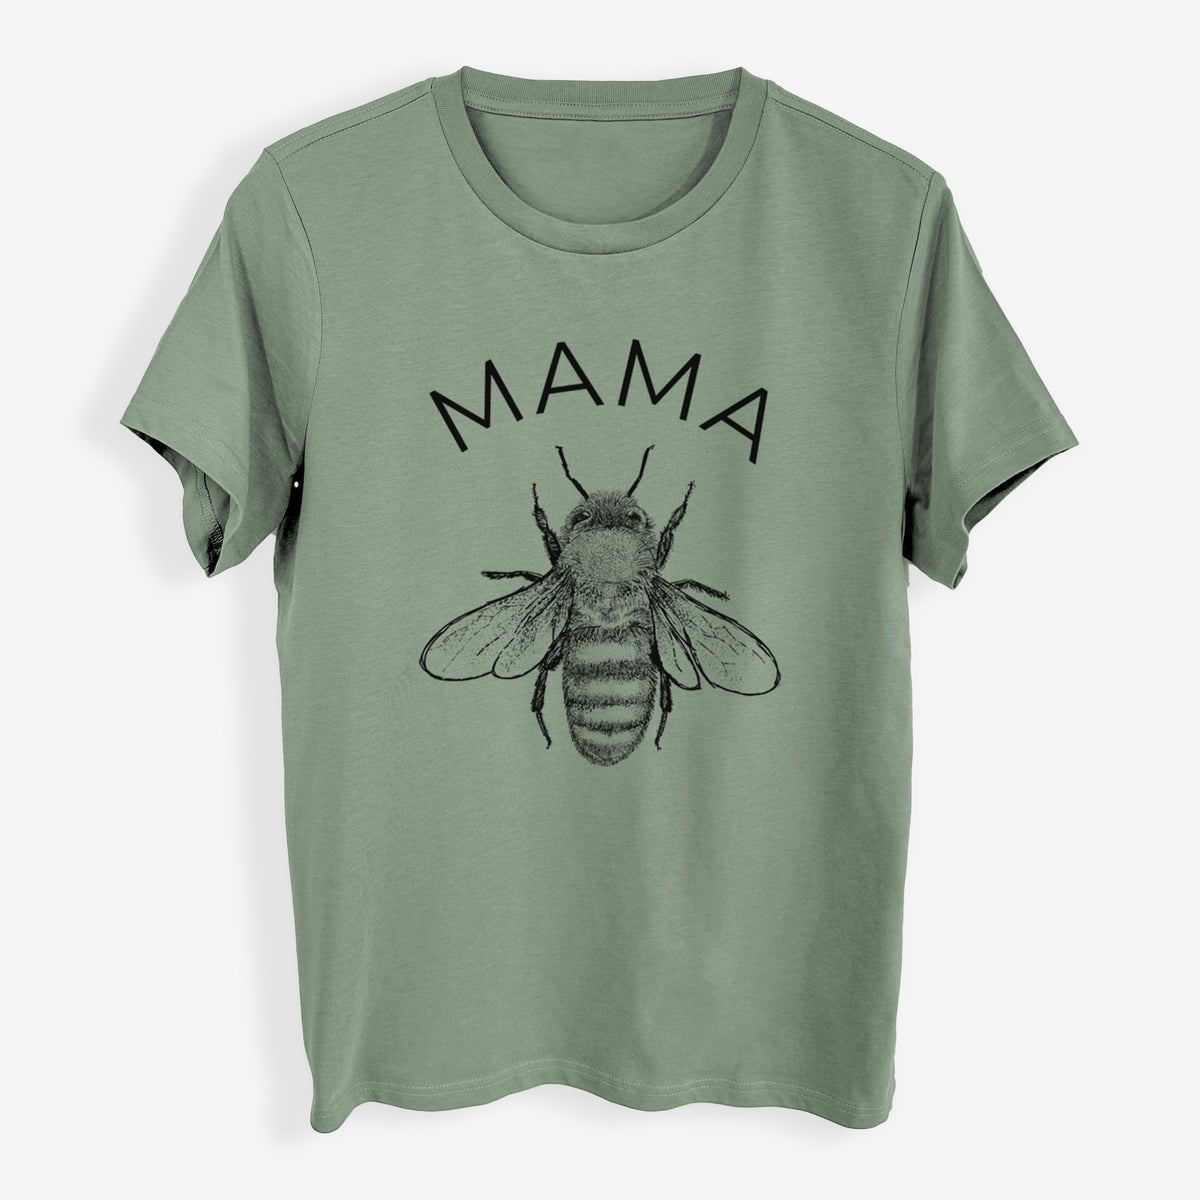 Mama Bee - Womens Everyday Maple Tee